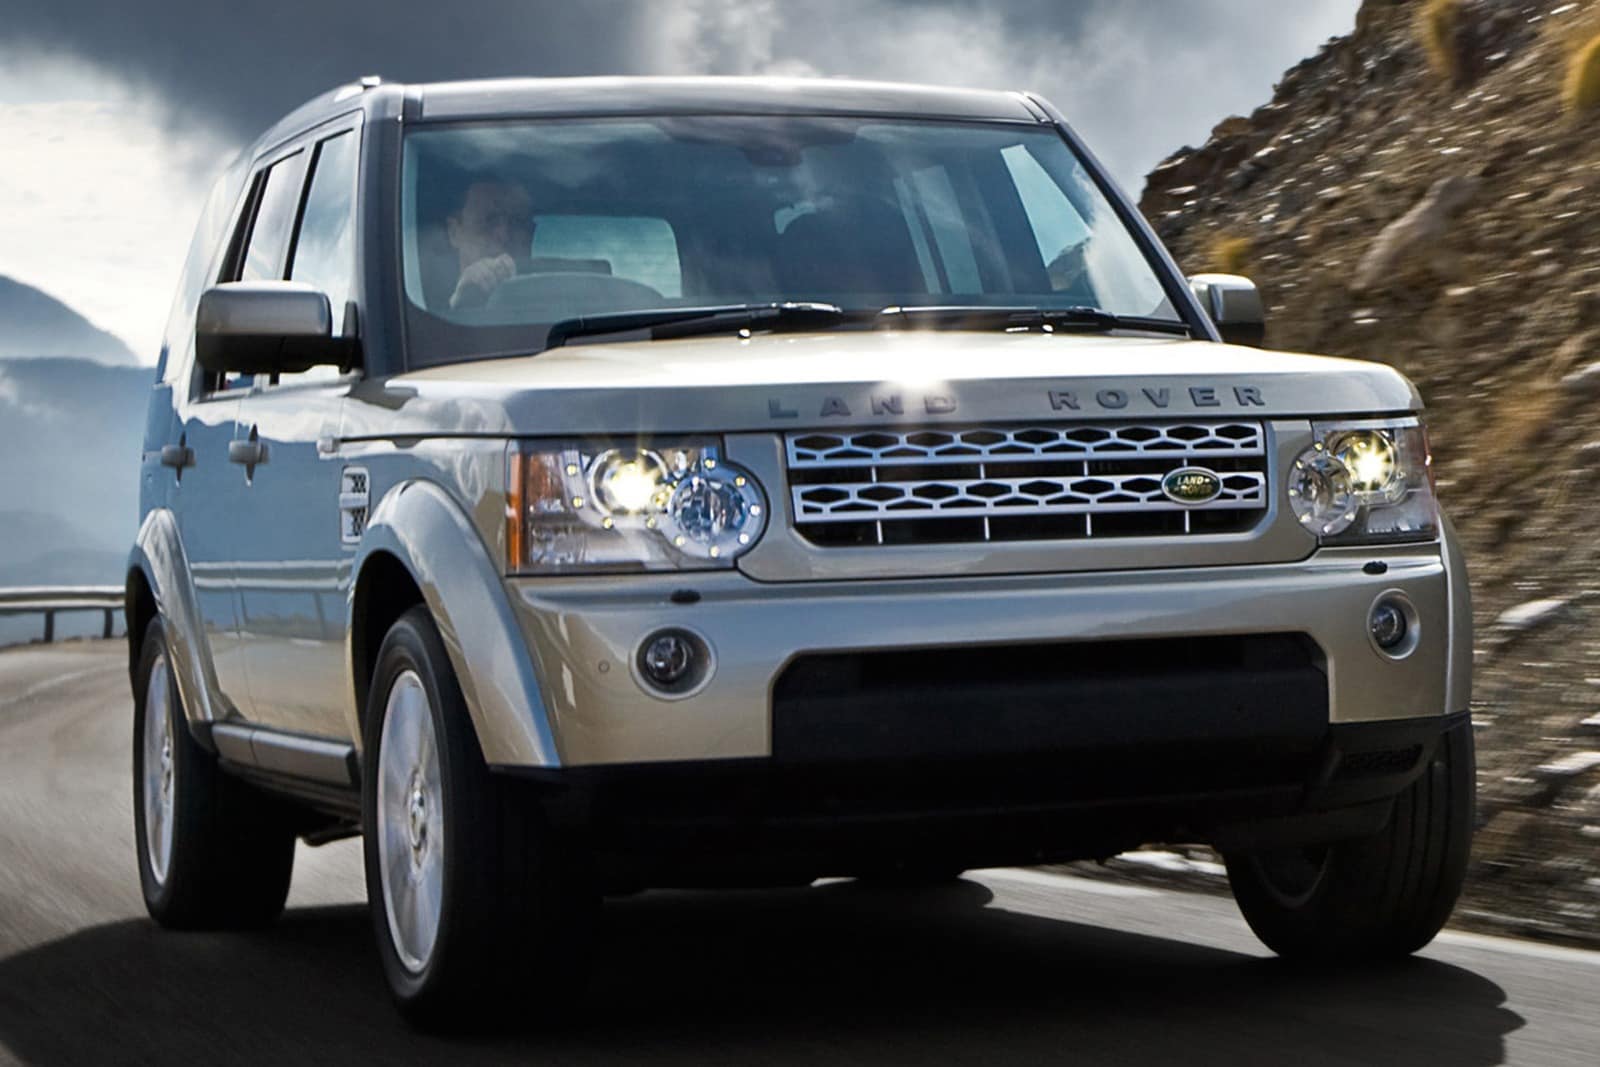 2010 Land Rover Lr4 Review & Ratings | Edmunds